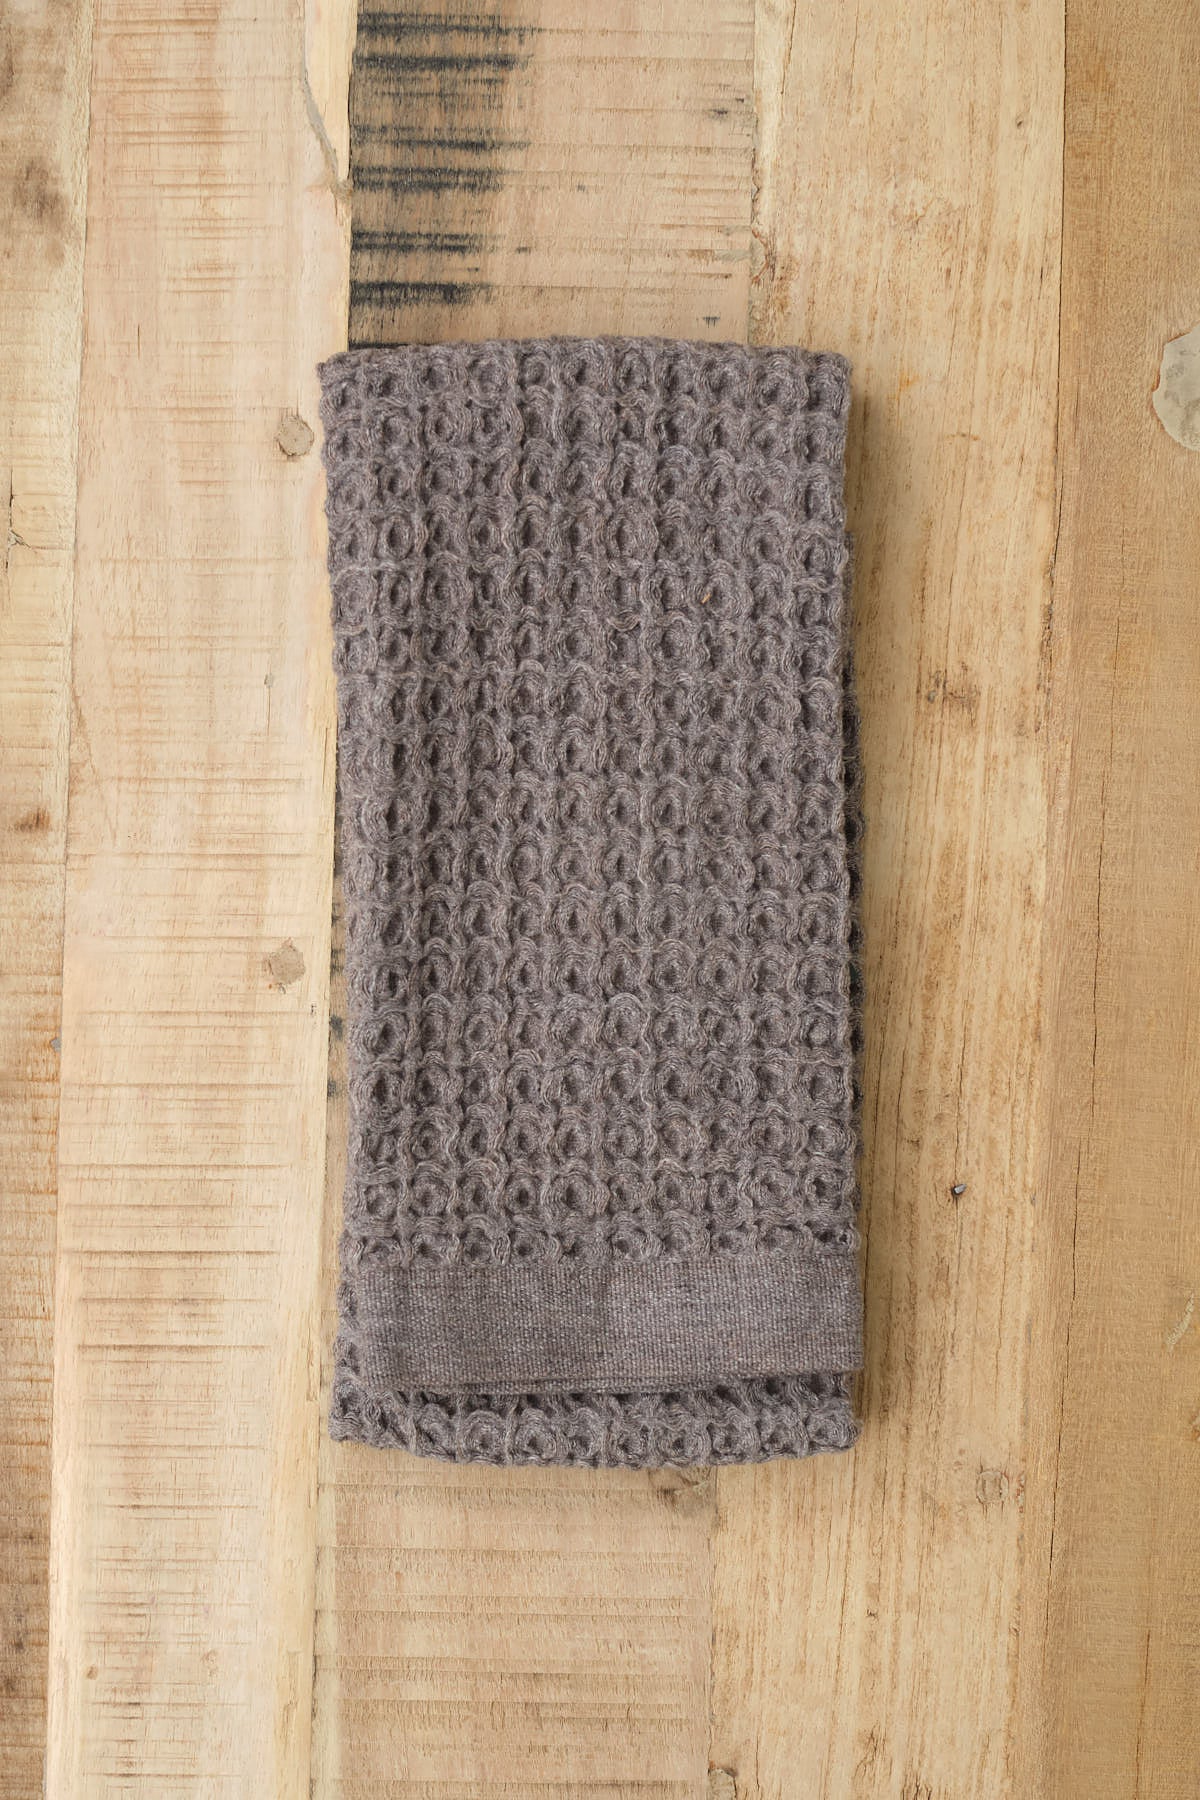 cotton lattice hand towel from kontex